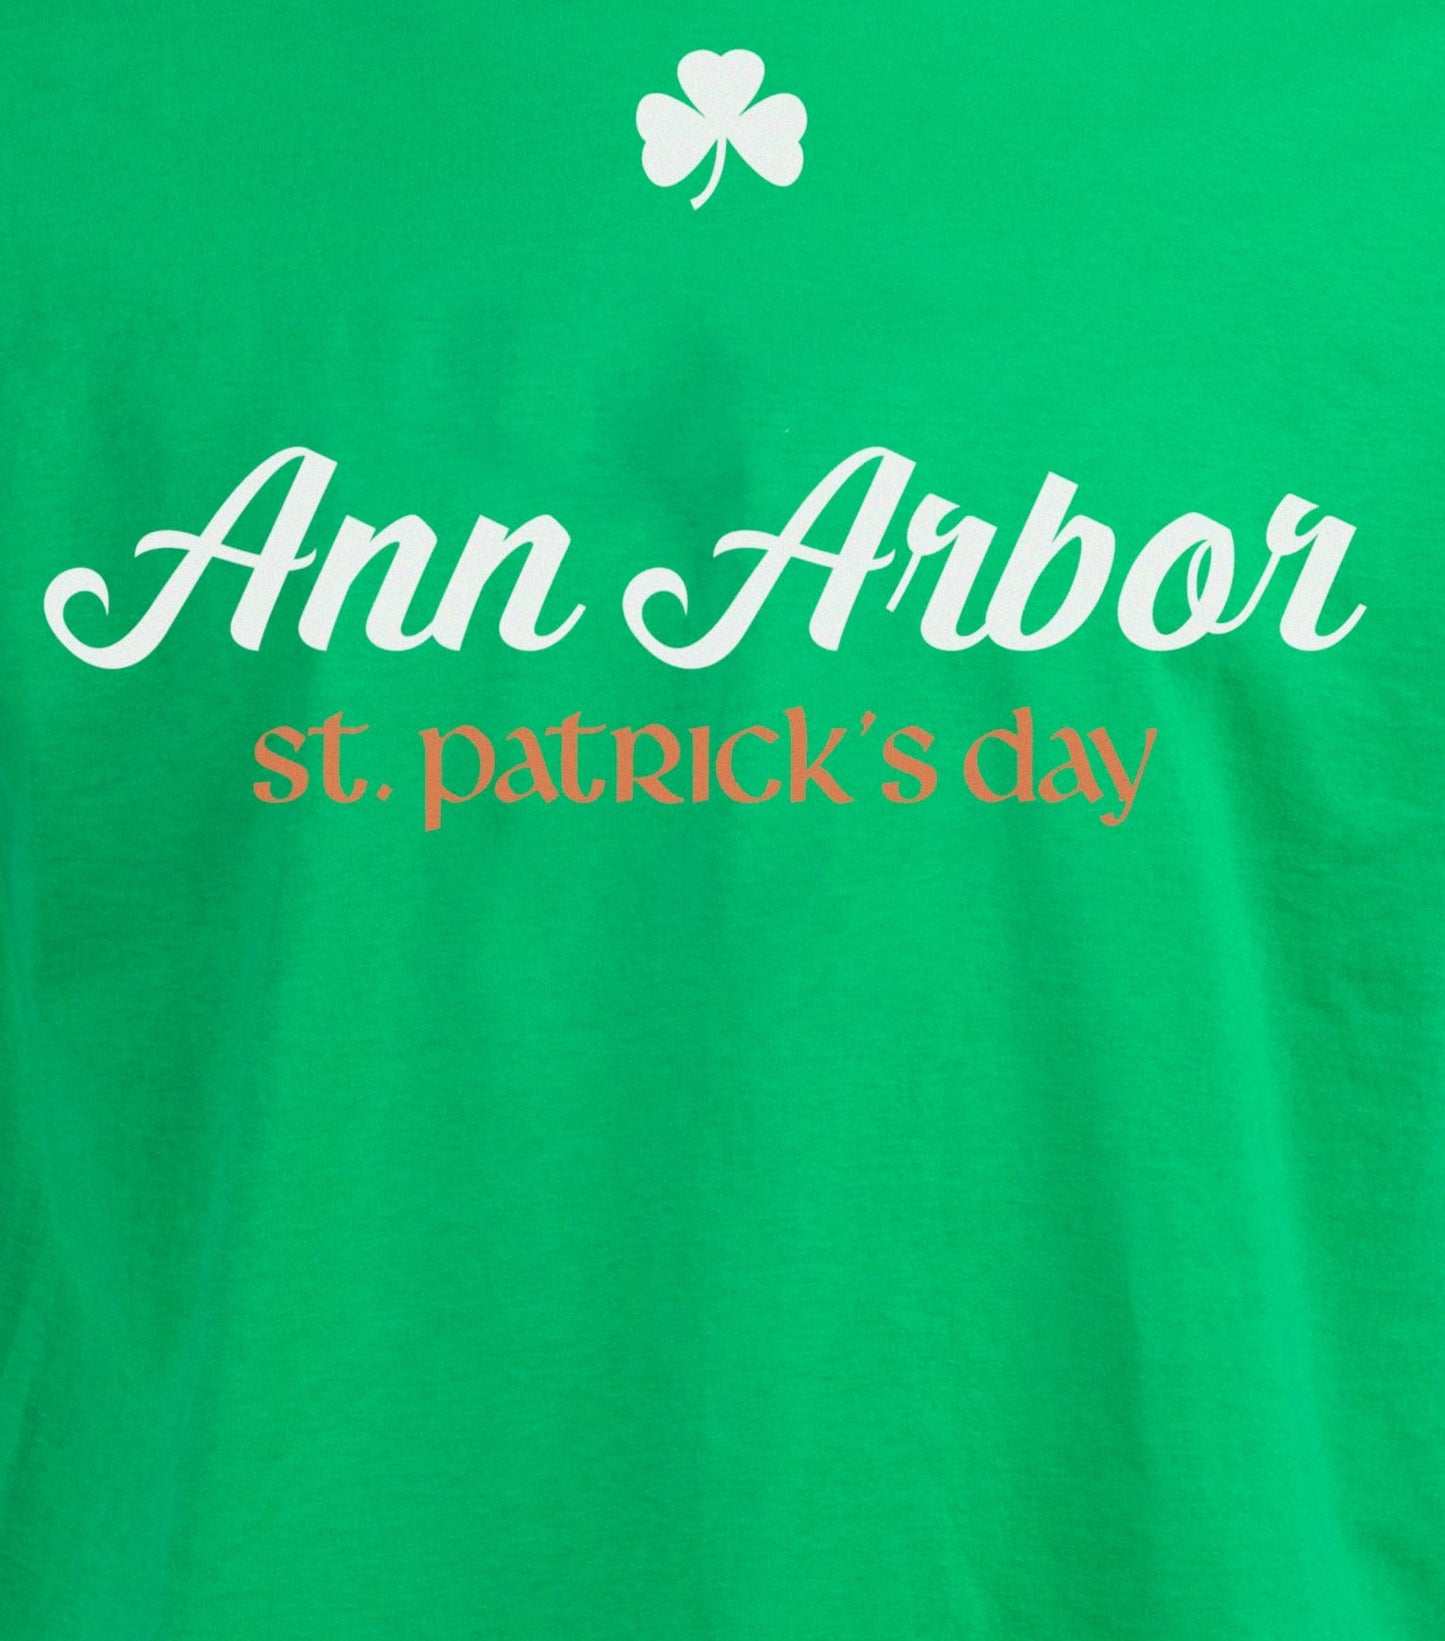 Ann Arbor St. Patrick's Day T-shirt